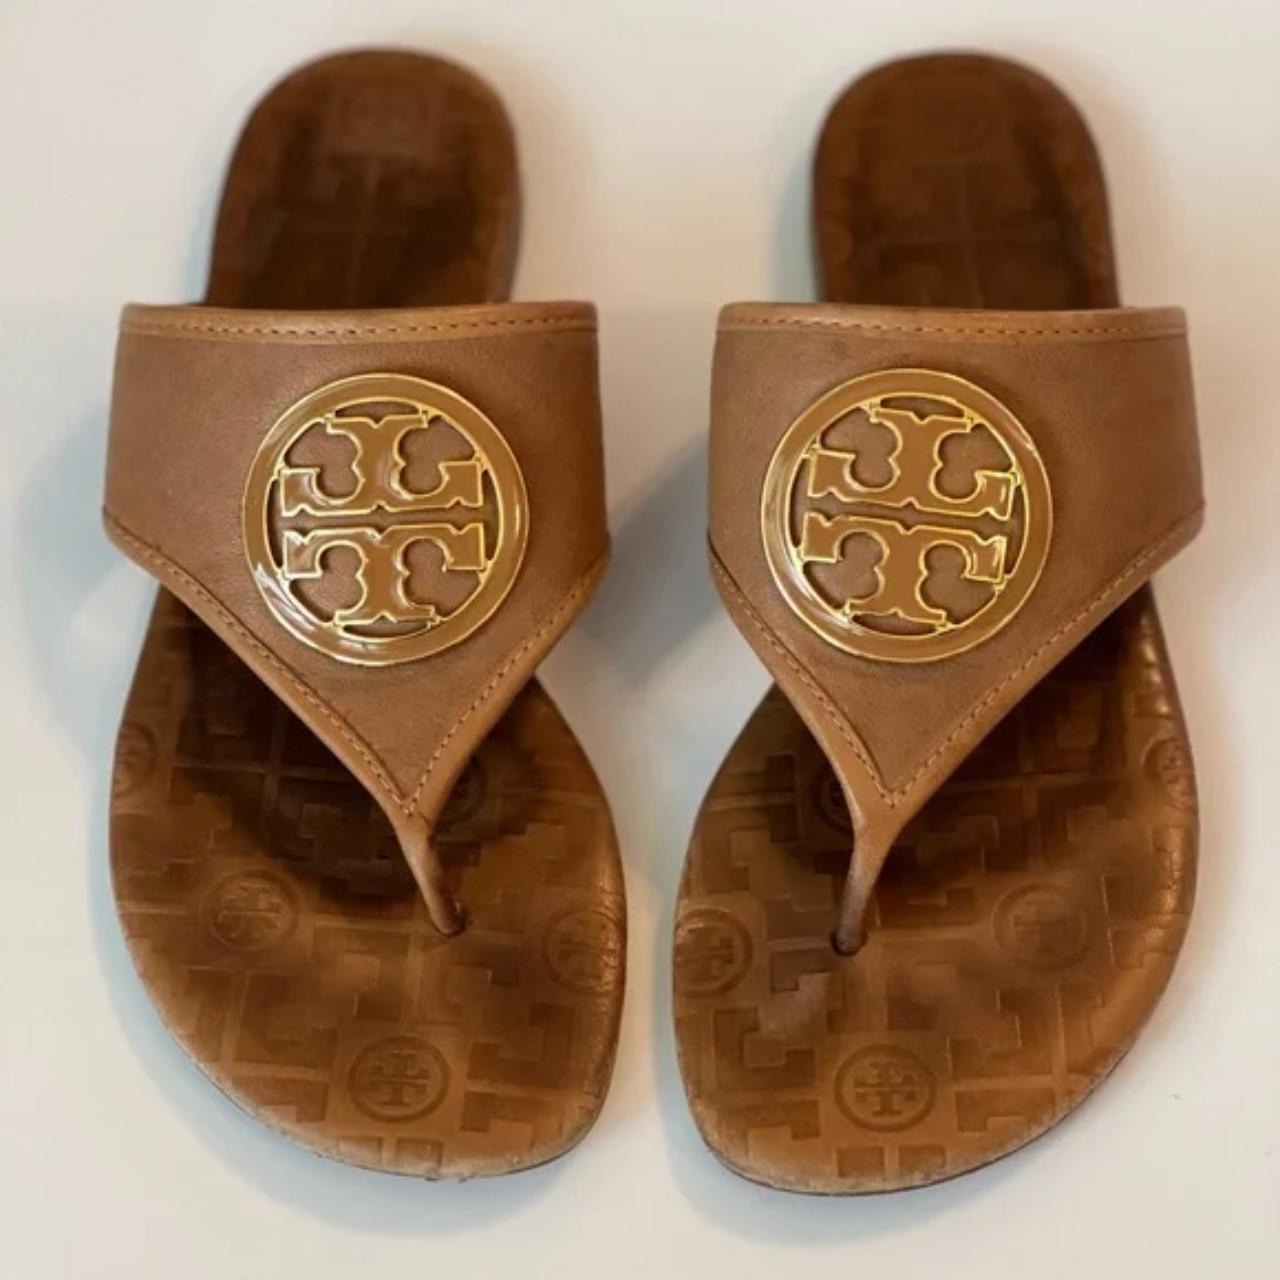 Tory Burch Miller sandals - Brown